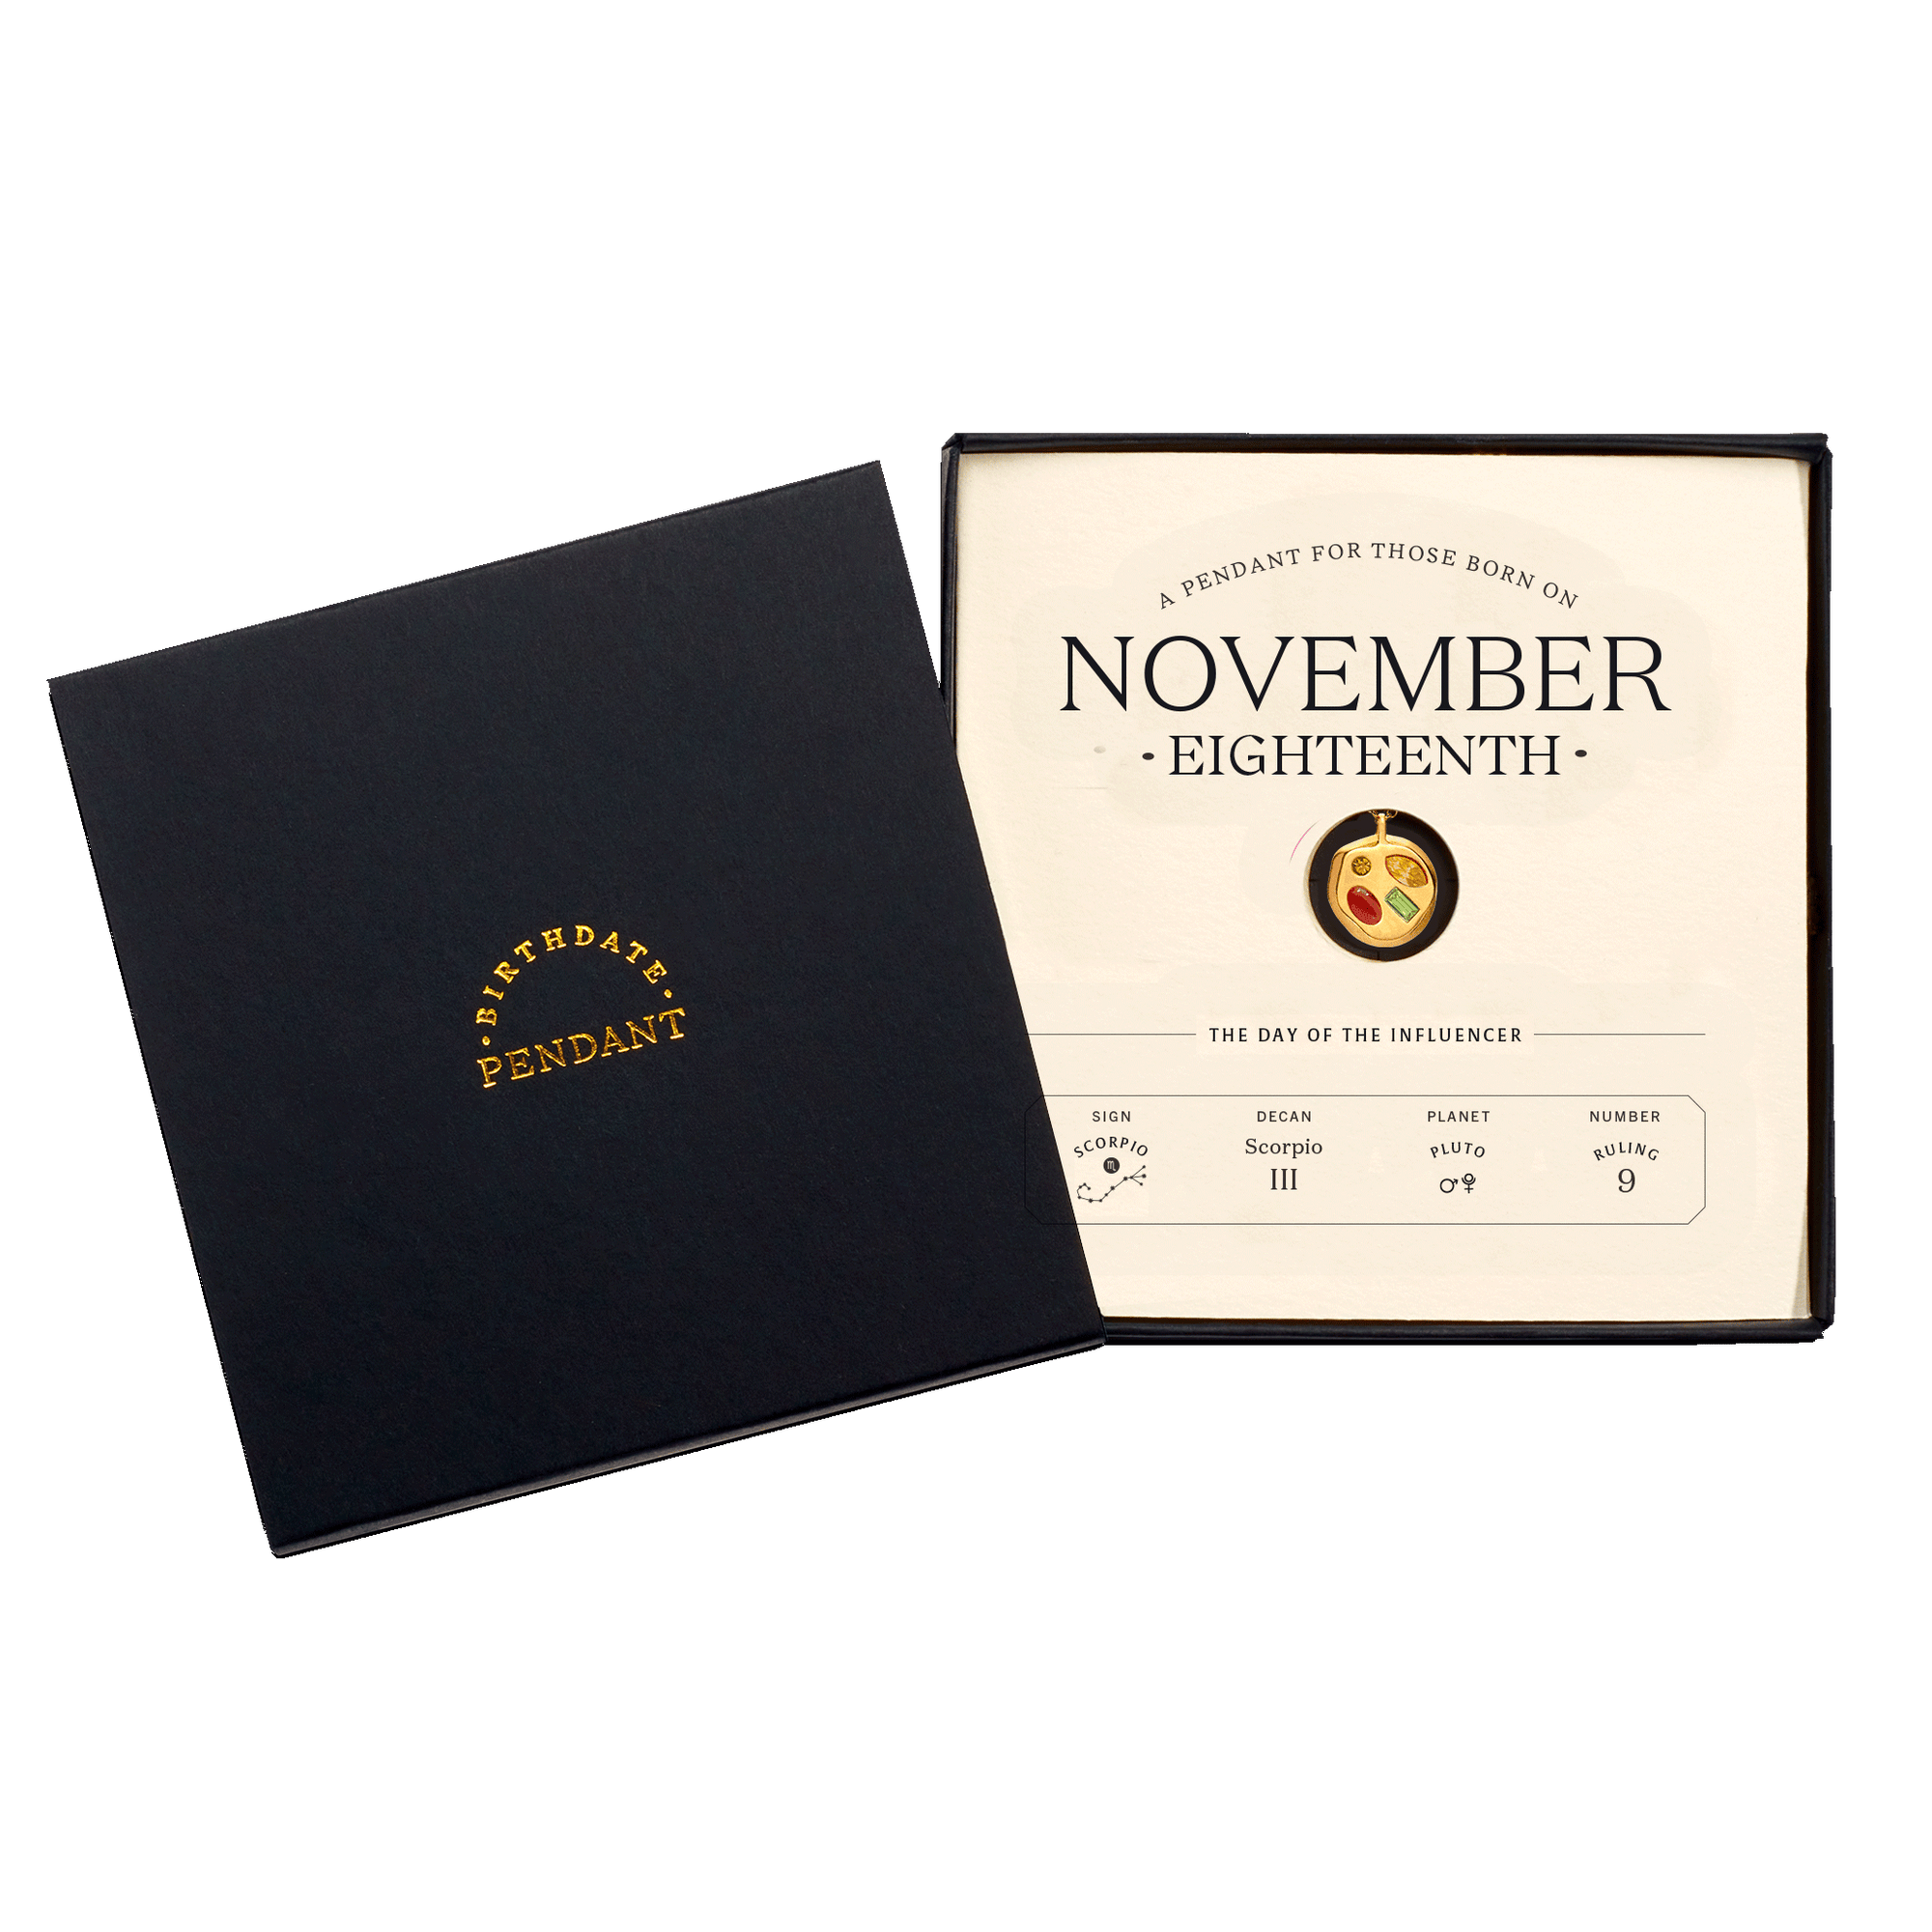 The November Eighteenth Pendant inside its box